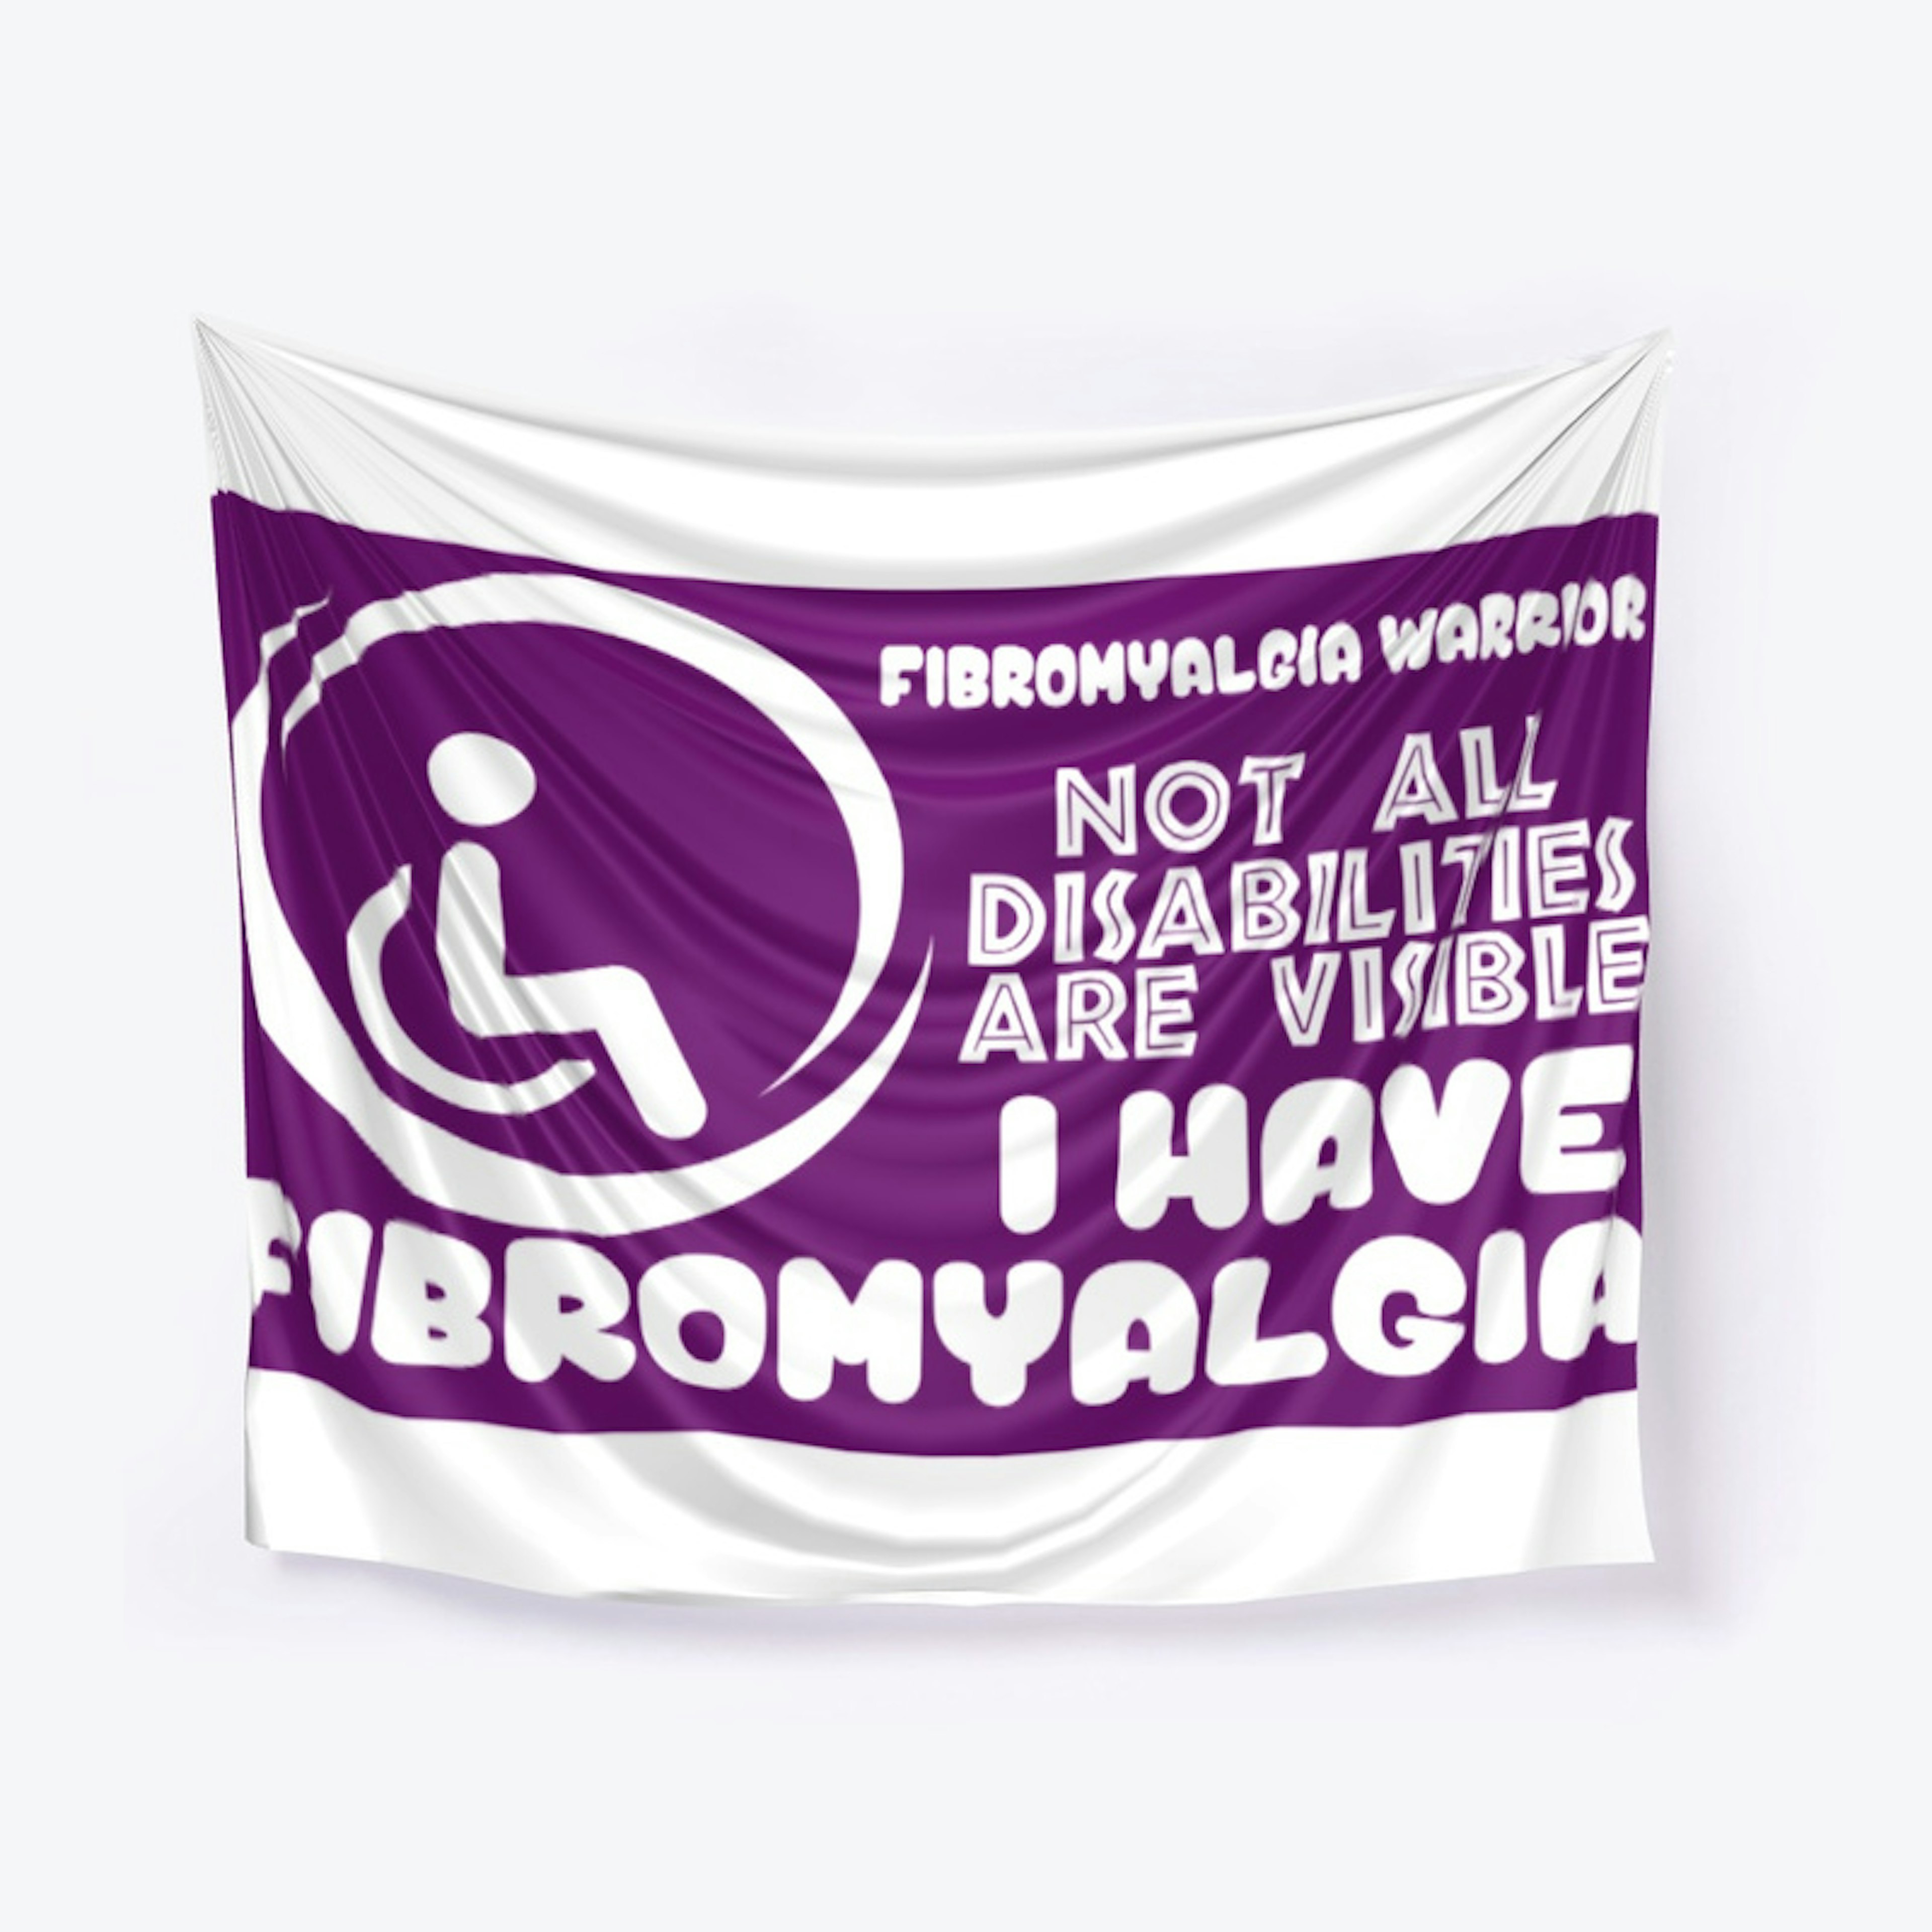 Disabilities of Fibrormyalgia